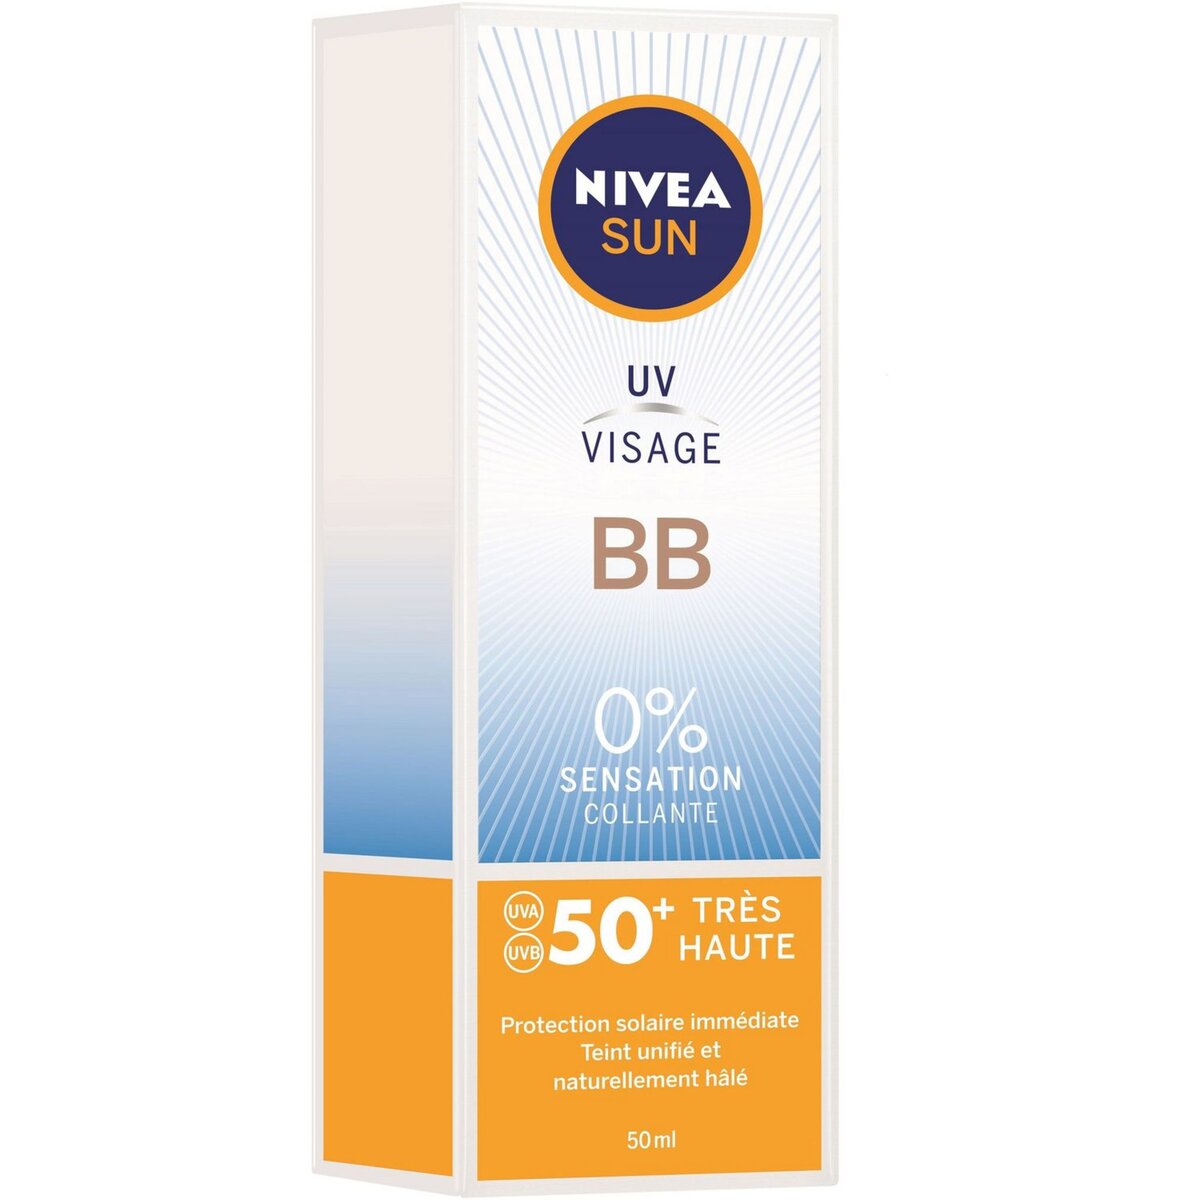 NIVEA SUN BB crème visage SPF50+ 50ml